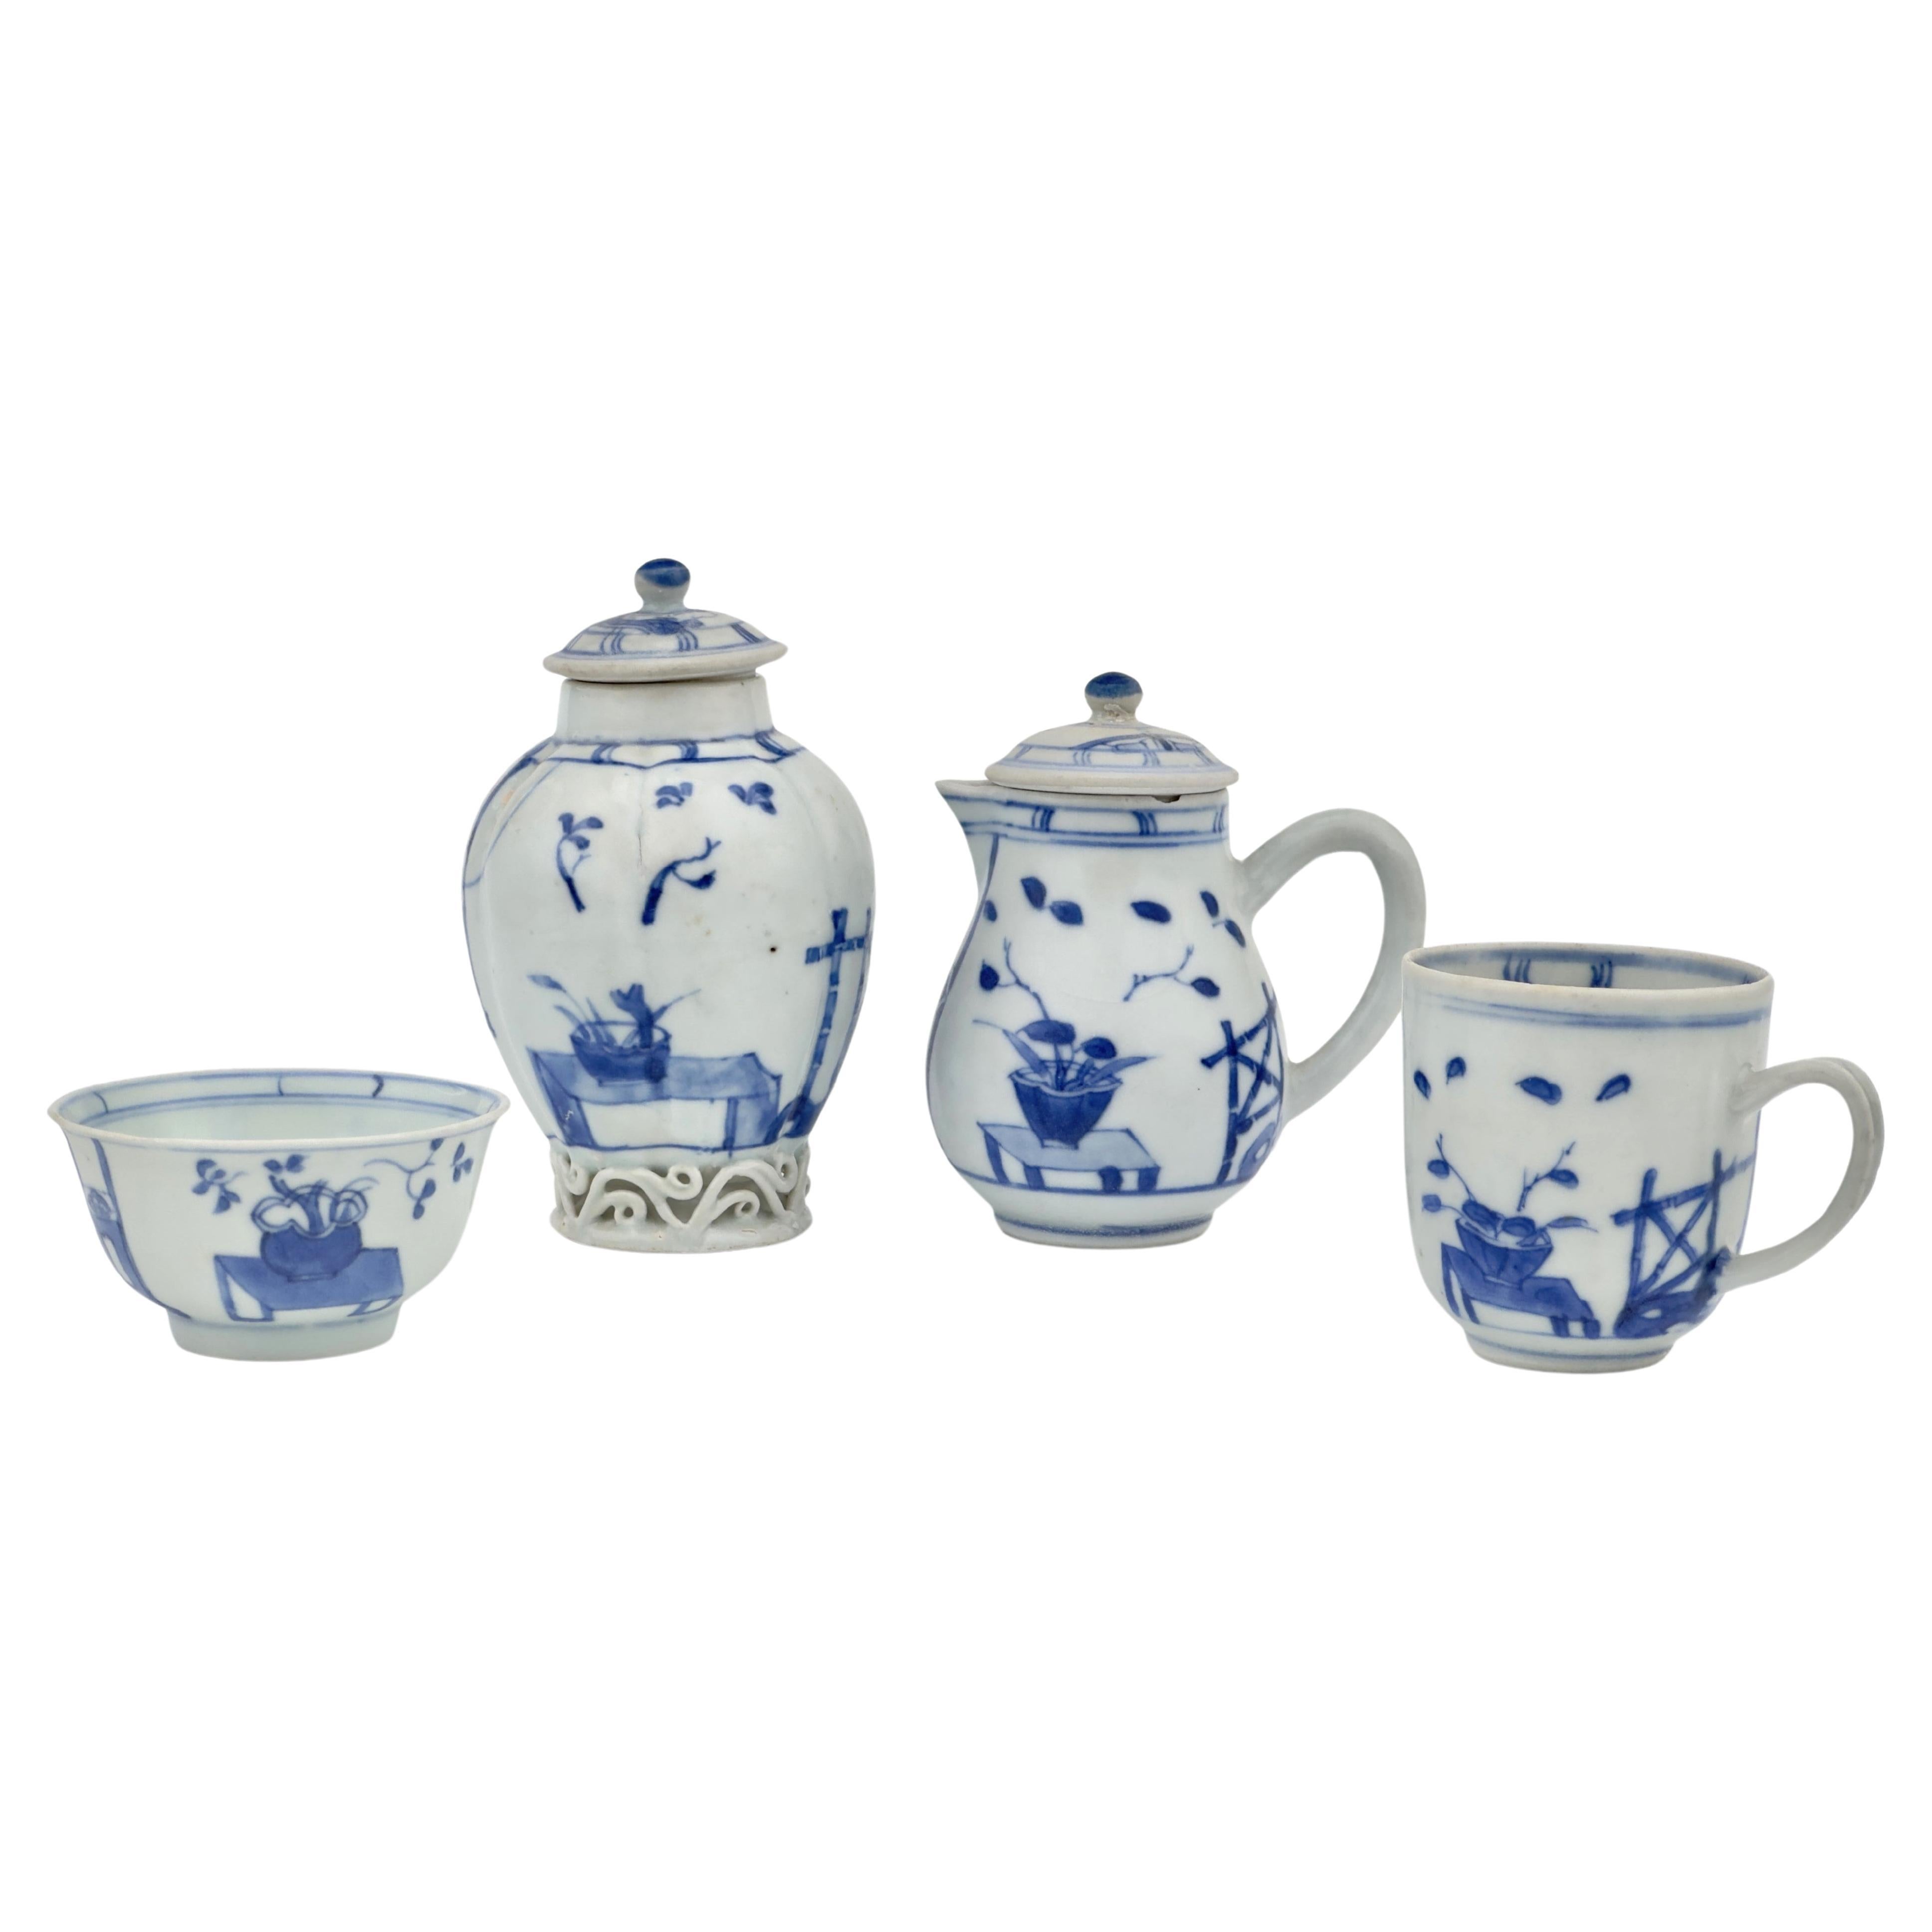 Imari Pavilion Pattern Blue and White Tea Set c 1725, Qing Dynasty, Yongzheng Re